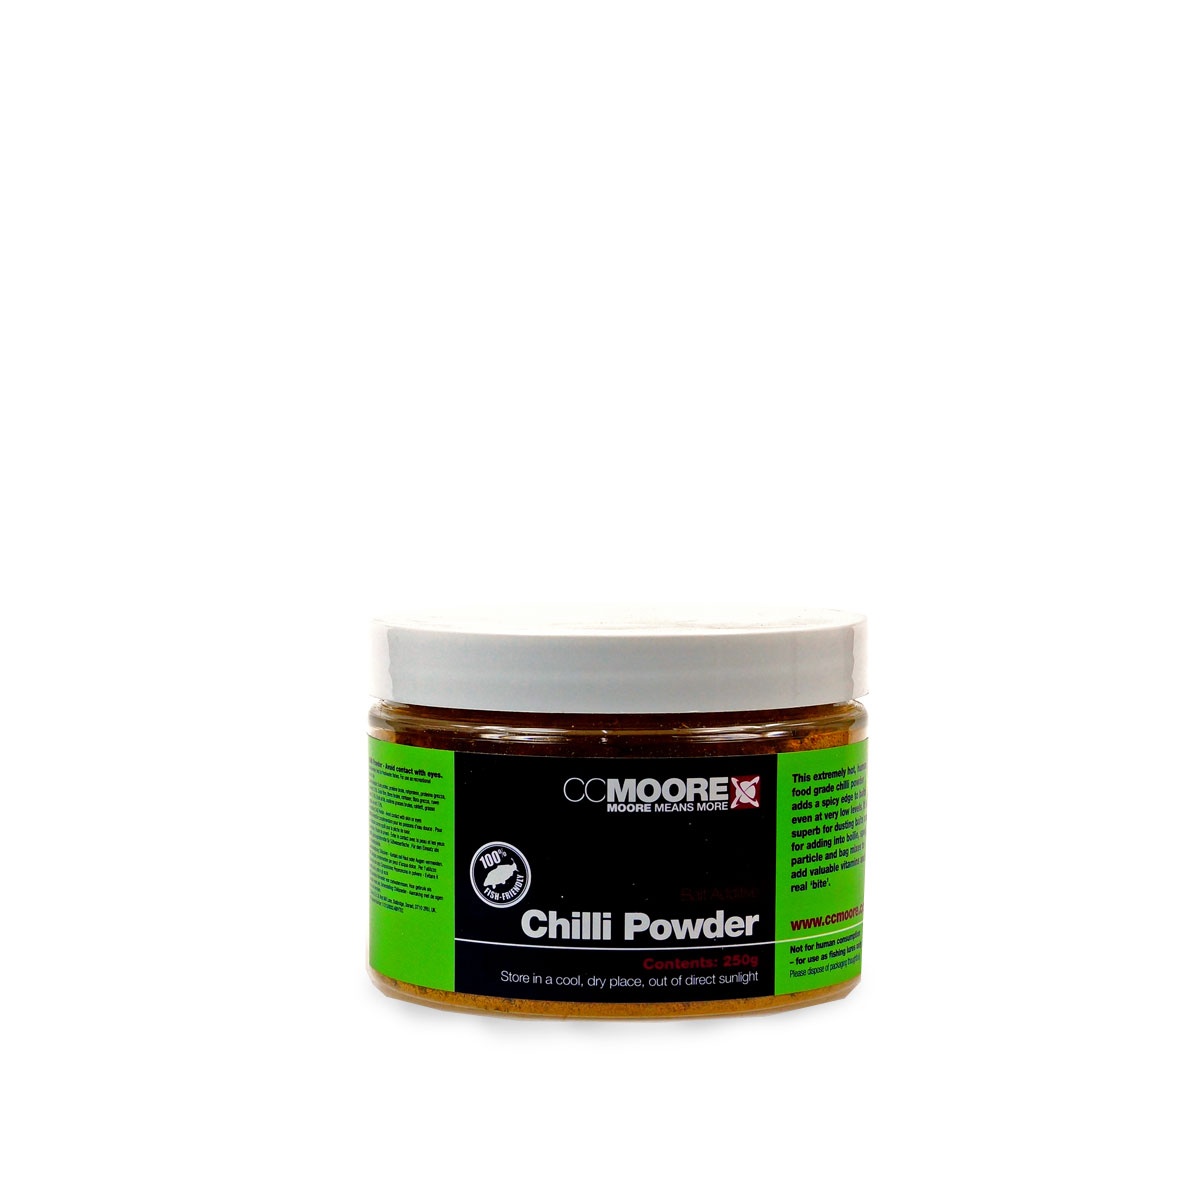 CcMoore Chili Powder 250 g opakowanie